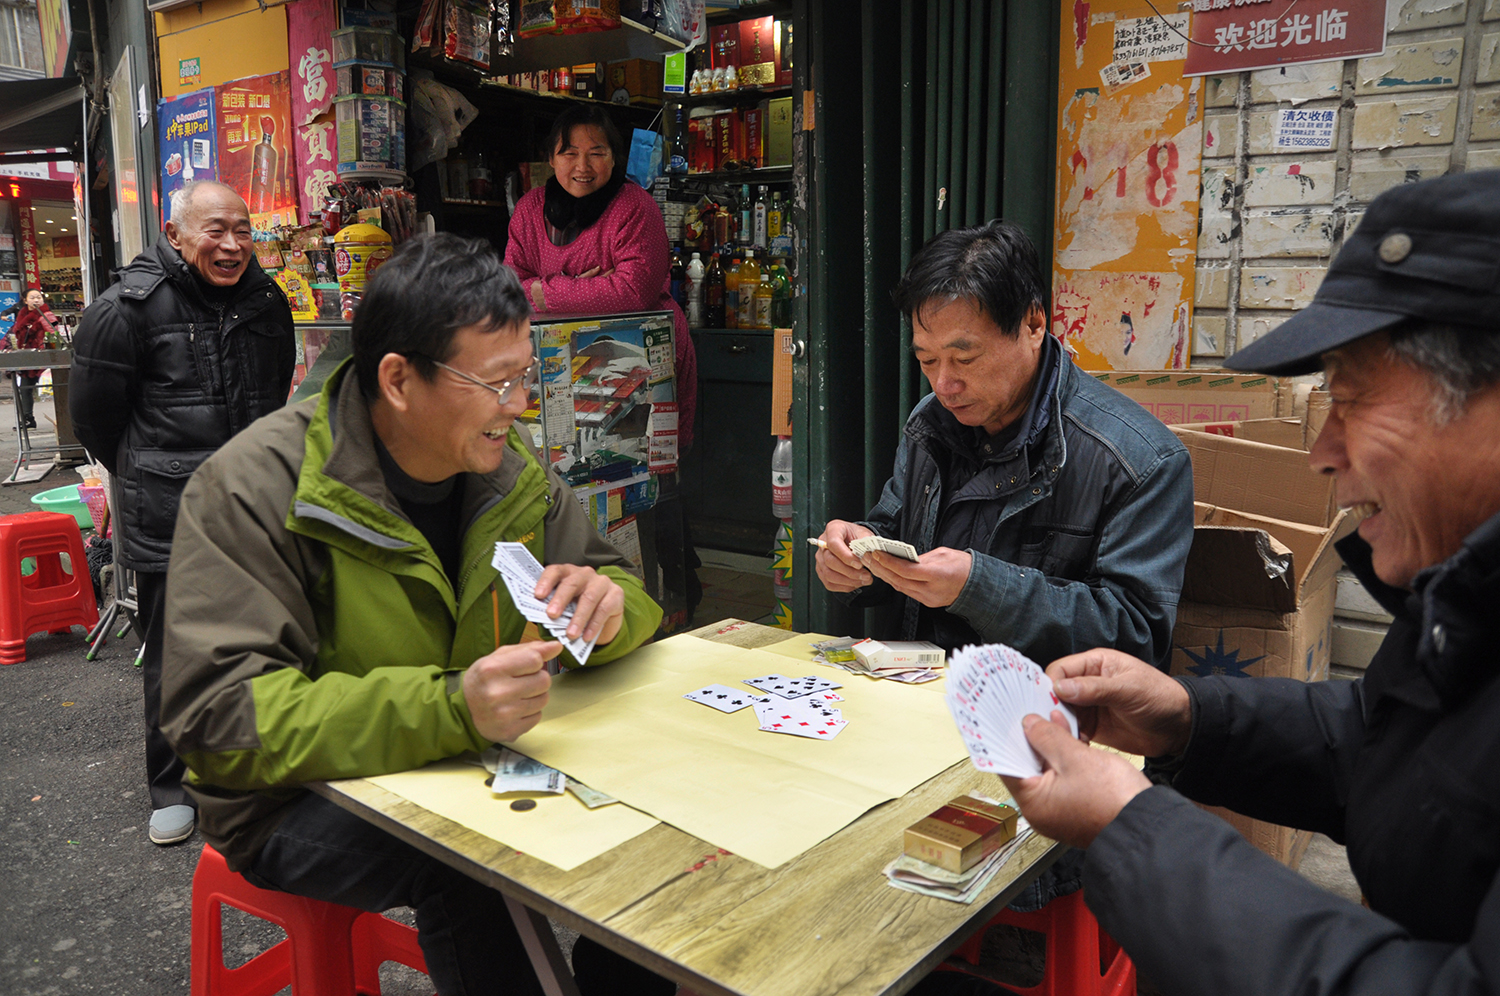  Card game, Wuhan 